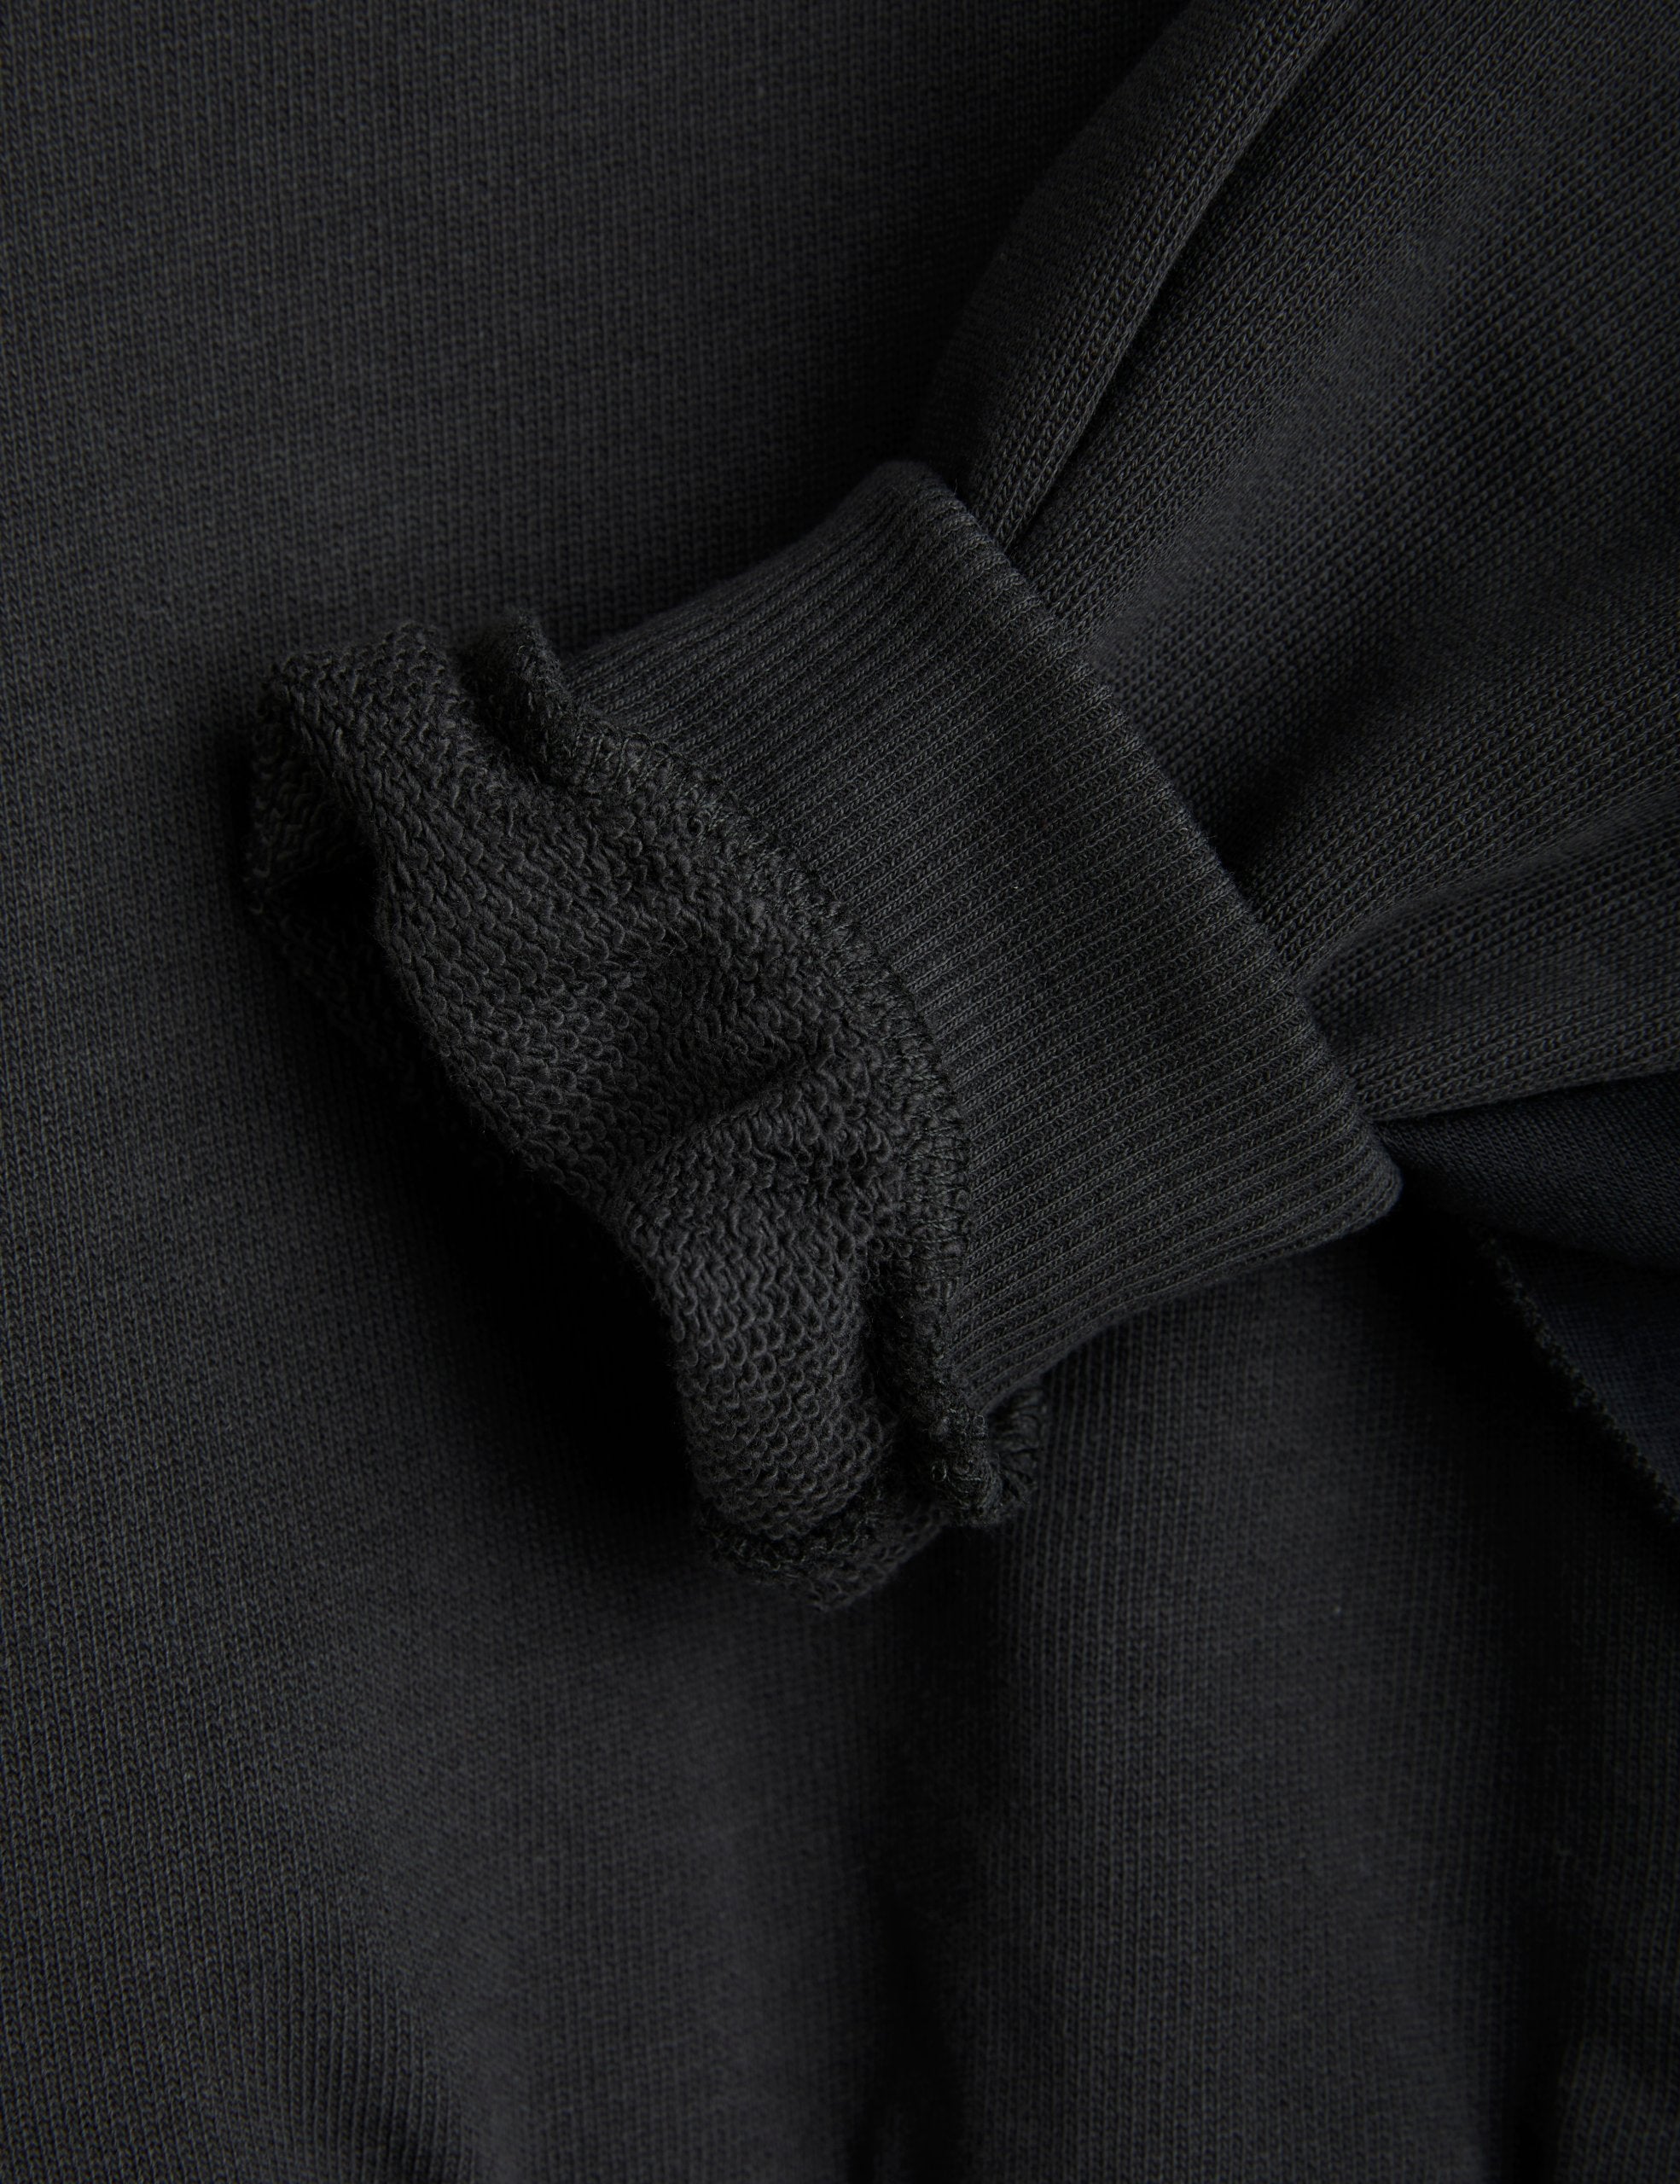 Mini Rodini Bat Sleeve Sweatshirt - Black